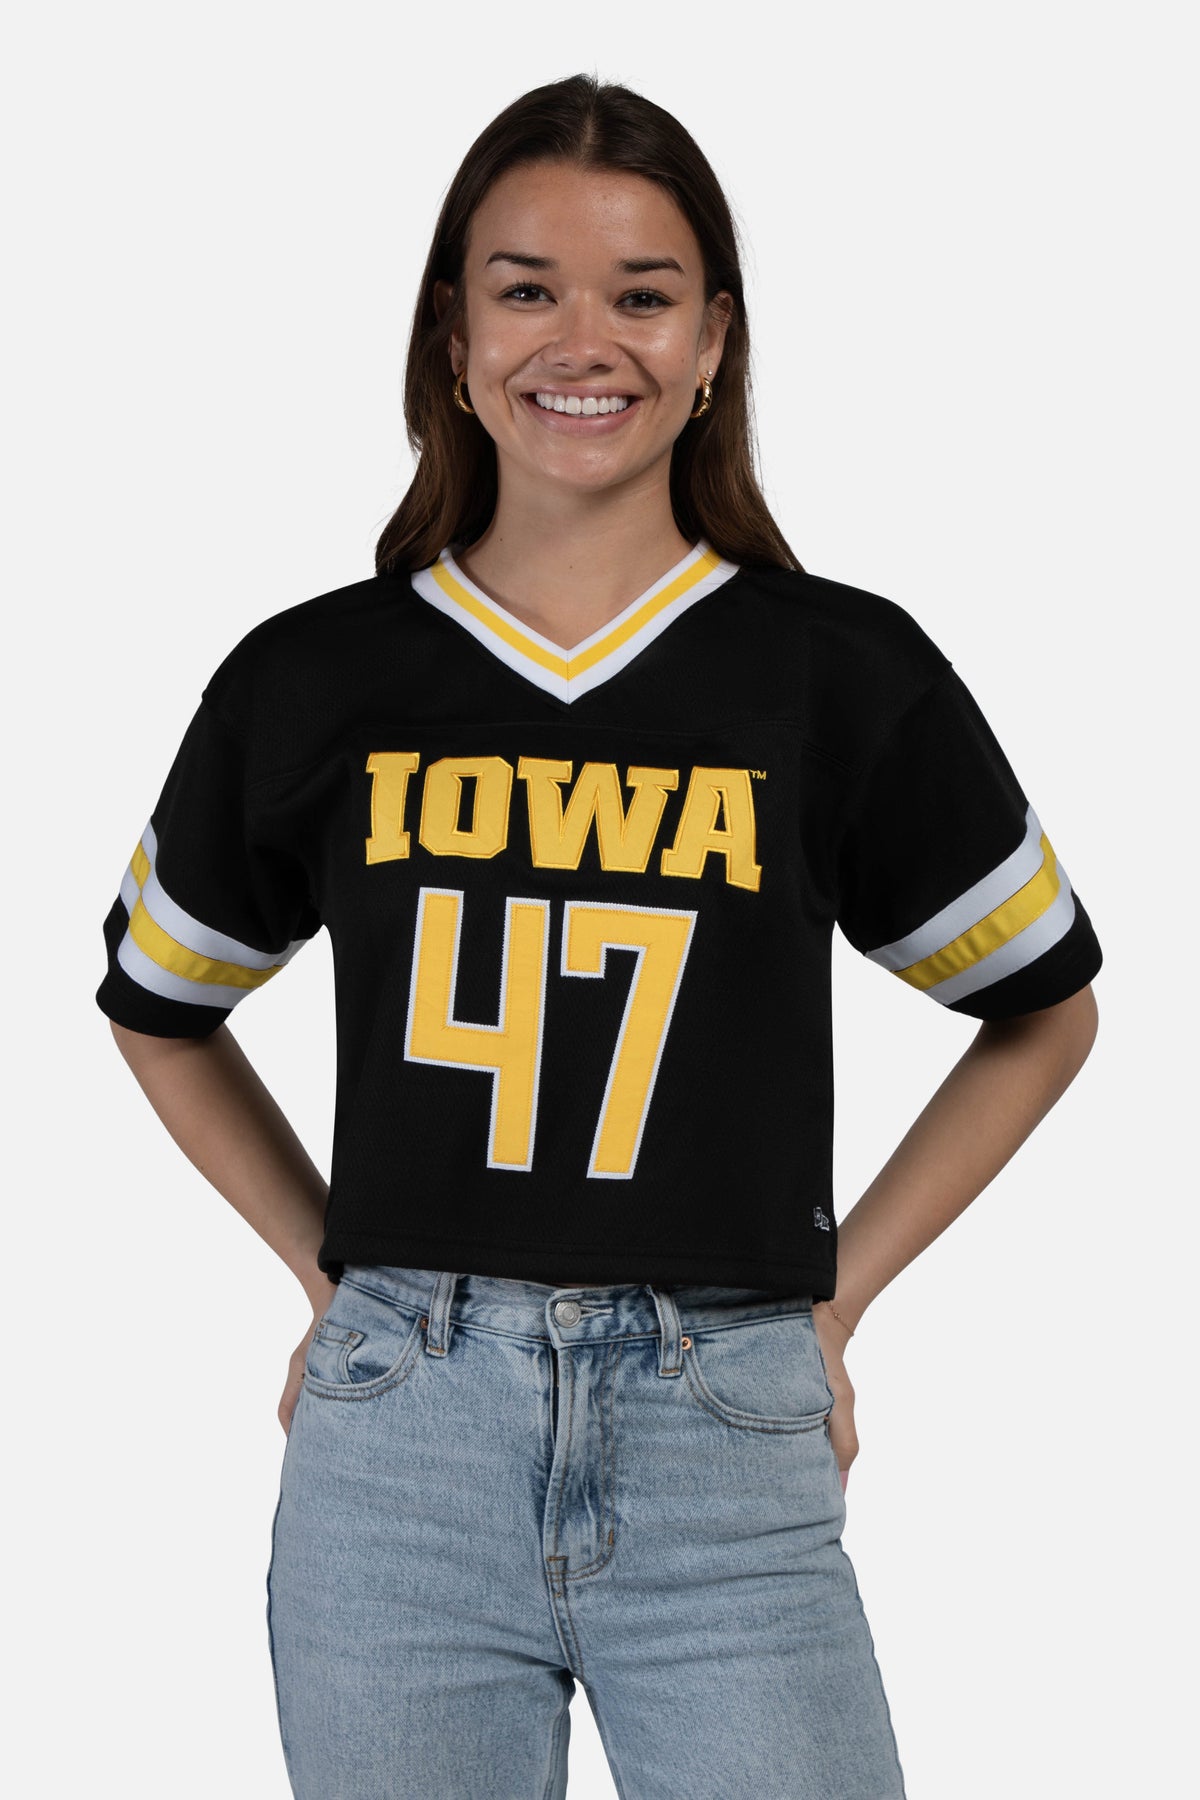 University of Iowa Football Top